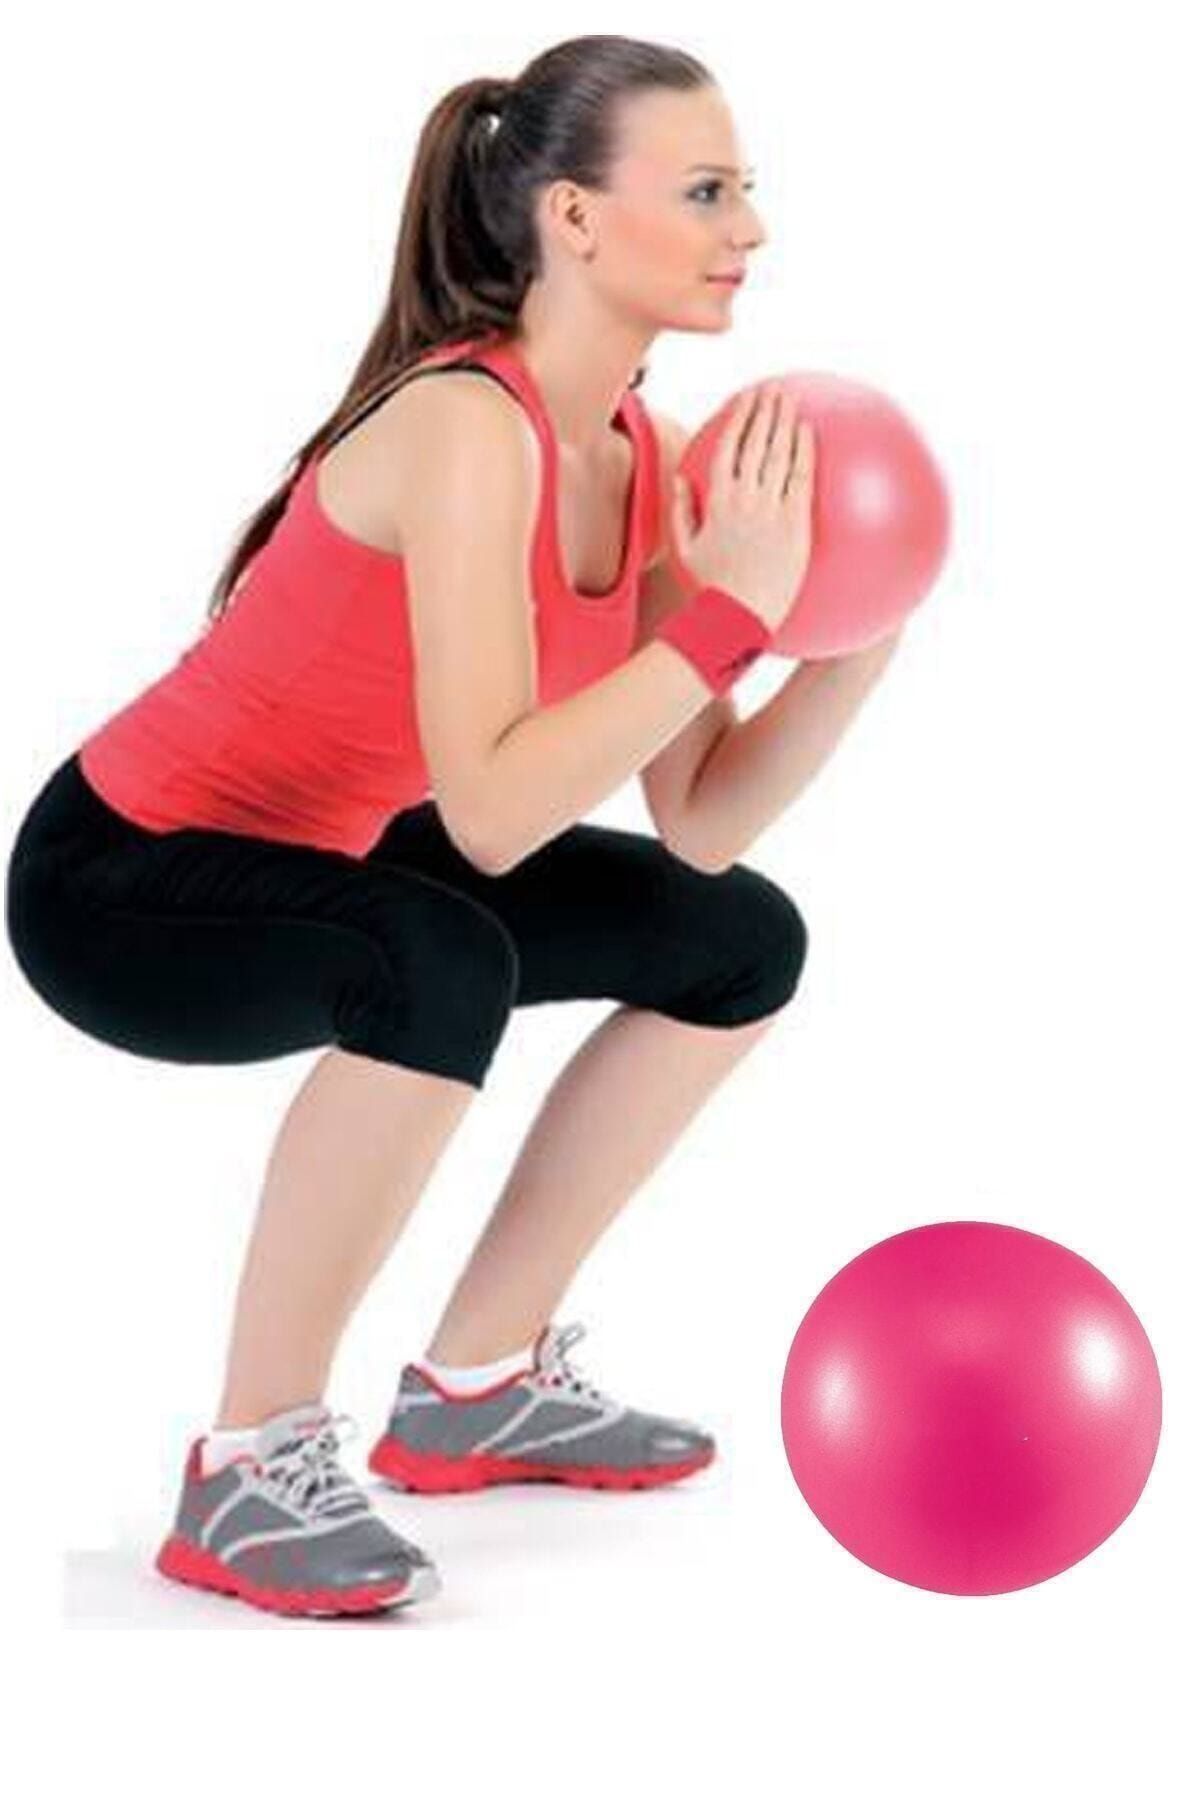 AYLA STAND Delux Pembe Pilates Topu Jimnastik Yoga Plates Egzersiz Topu - Pembe 20 Cm